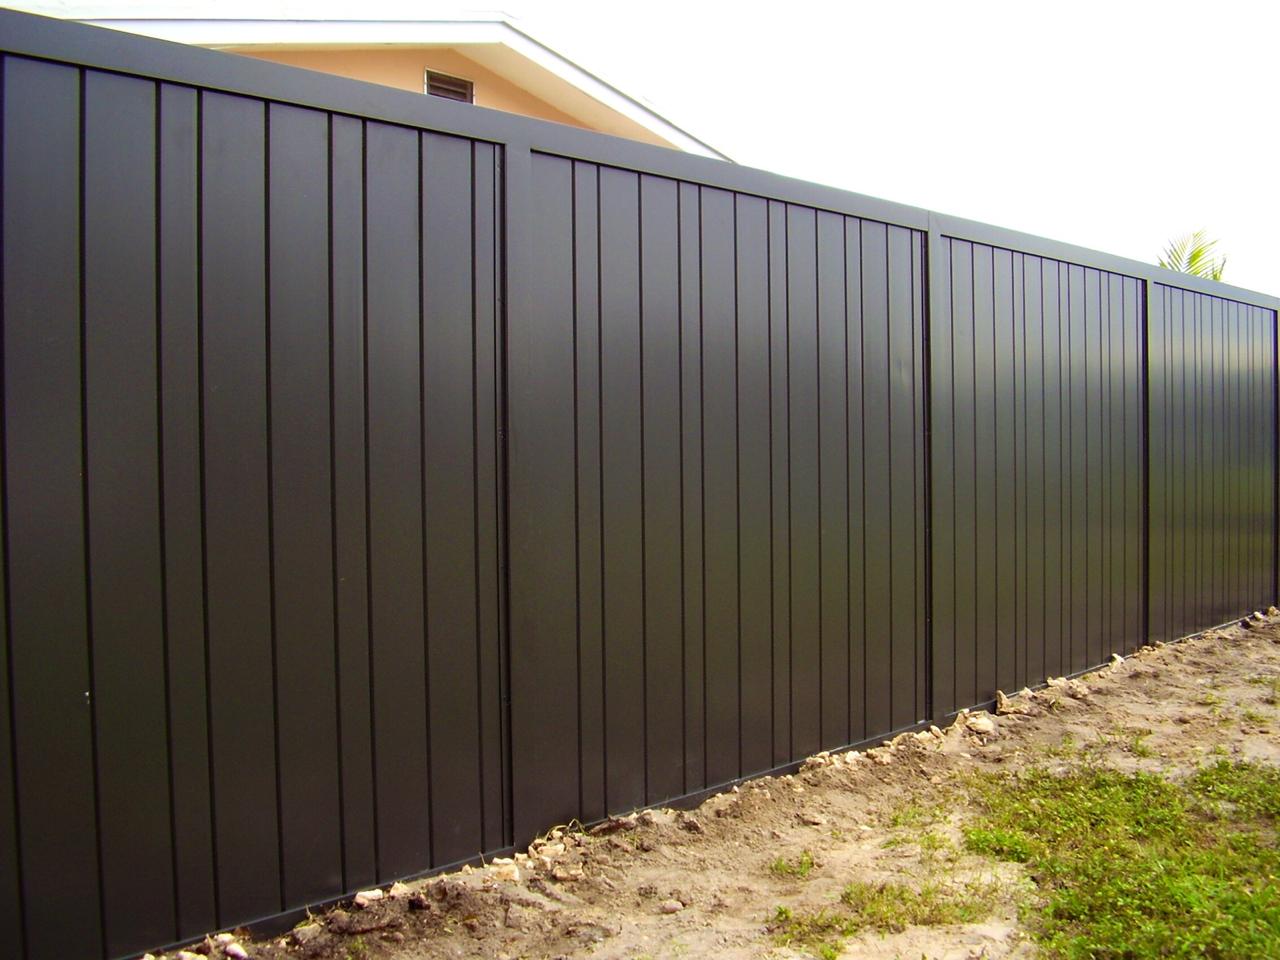 corrugated fence design ideas